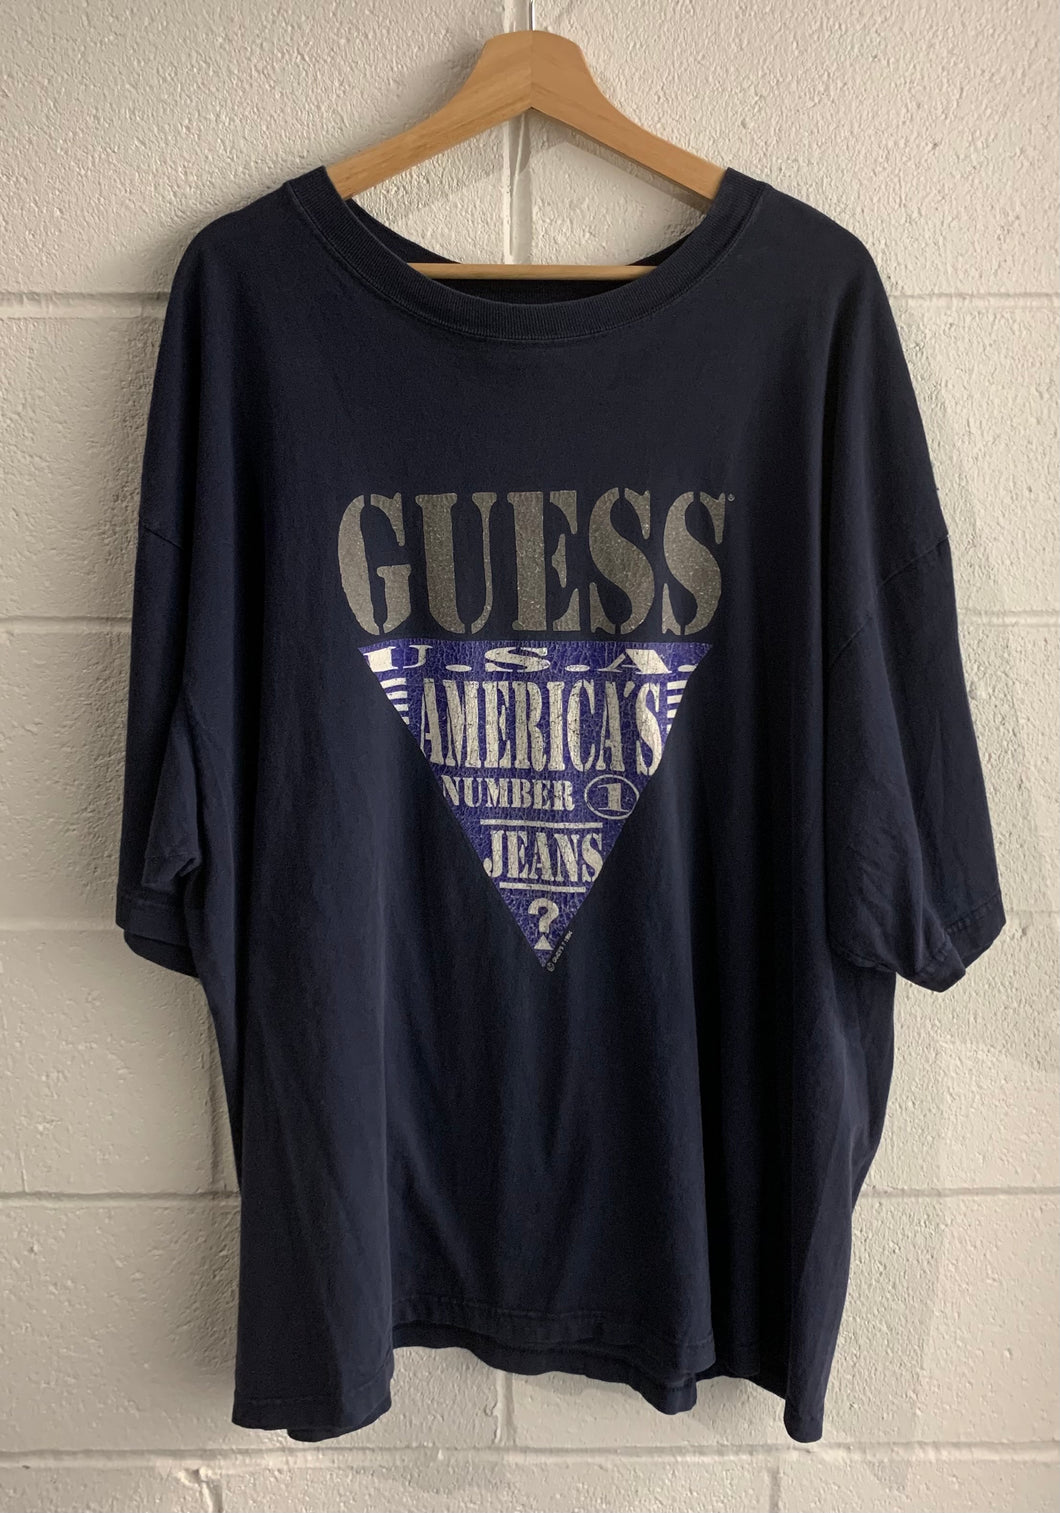 90s Guess Tee shirt